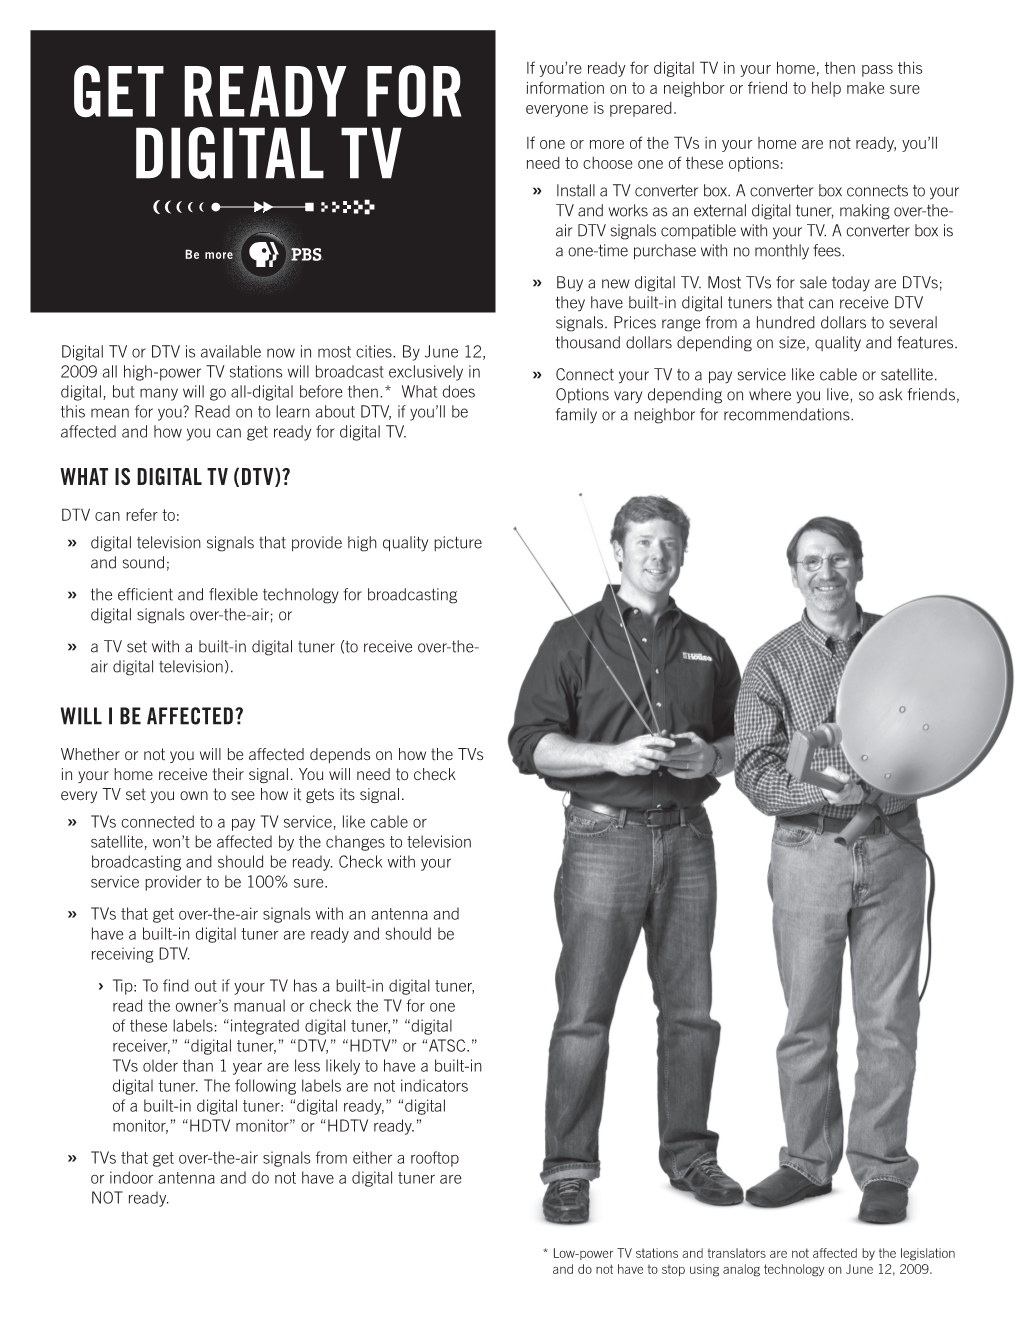 Get Ready for Digital TV